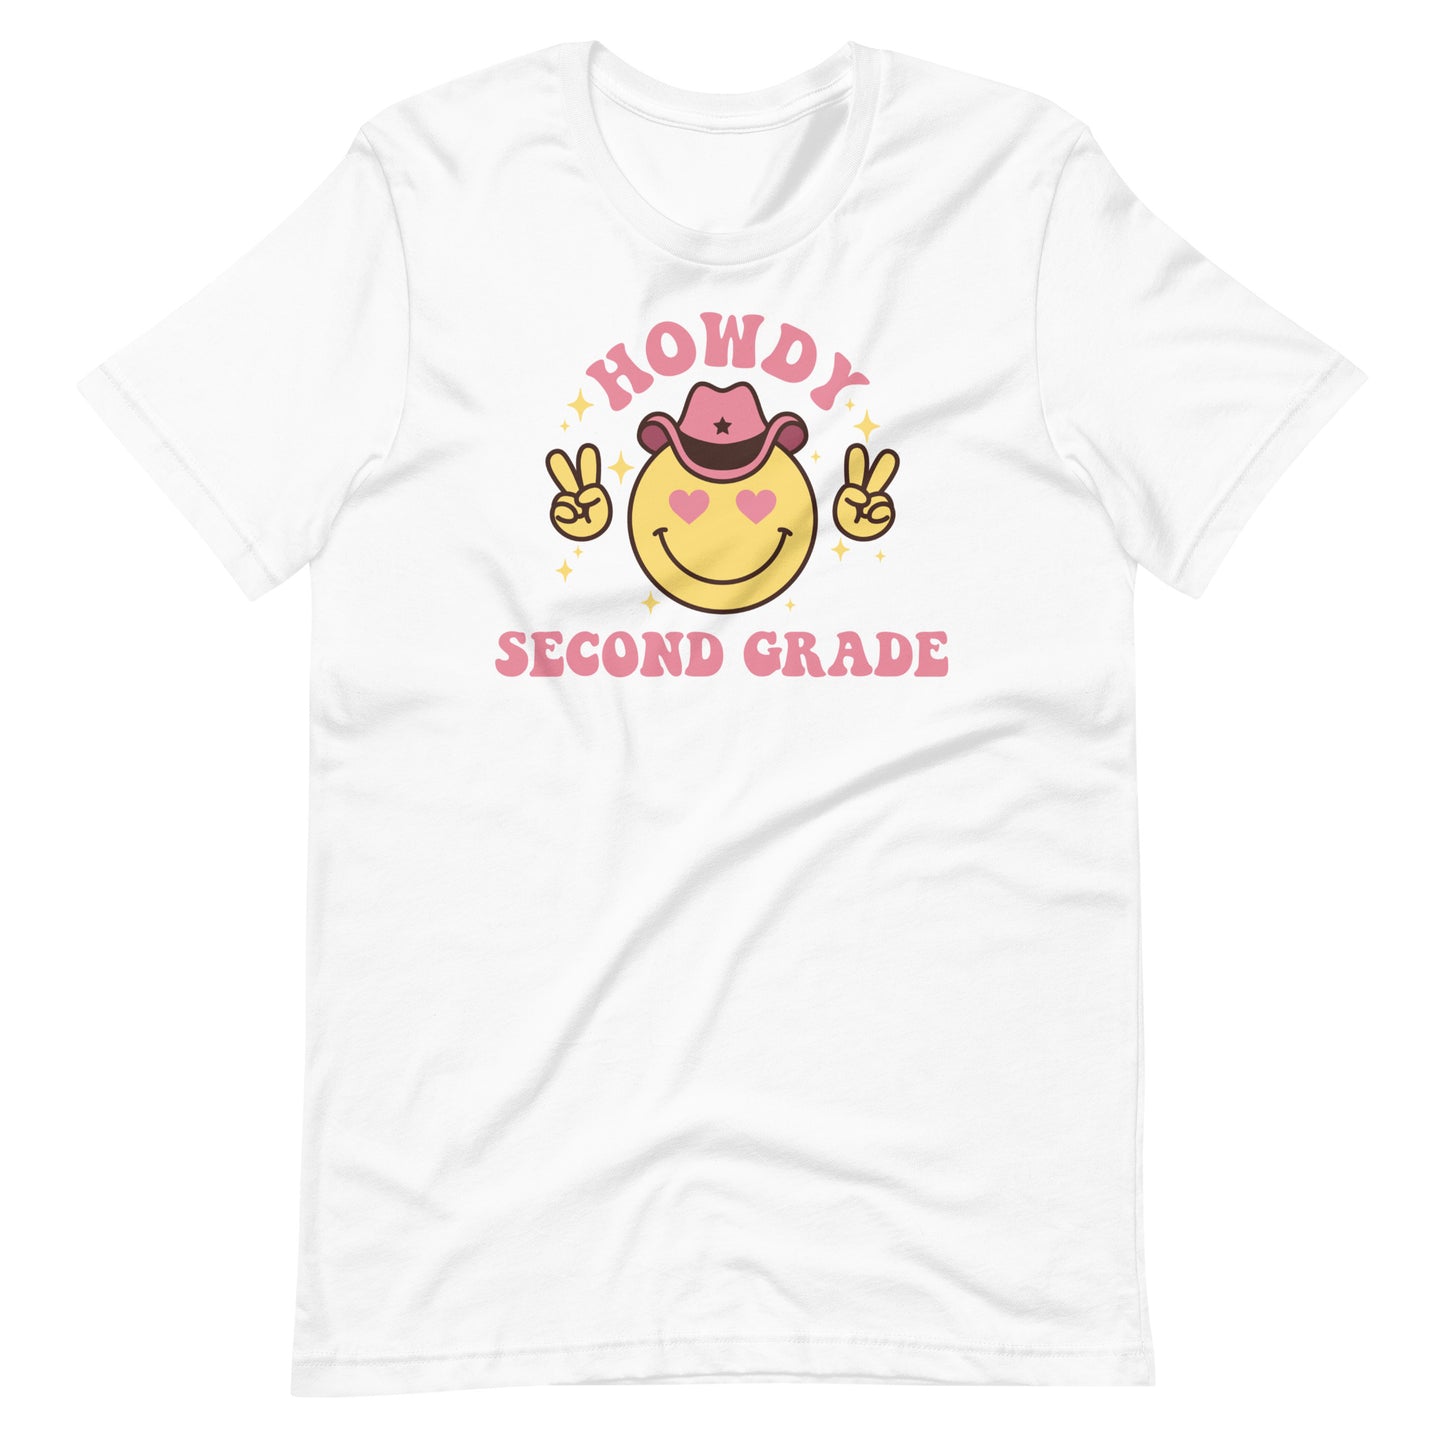 Second Grade Teacher Shirt Smile Howdy Pink Cowboy Design